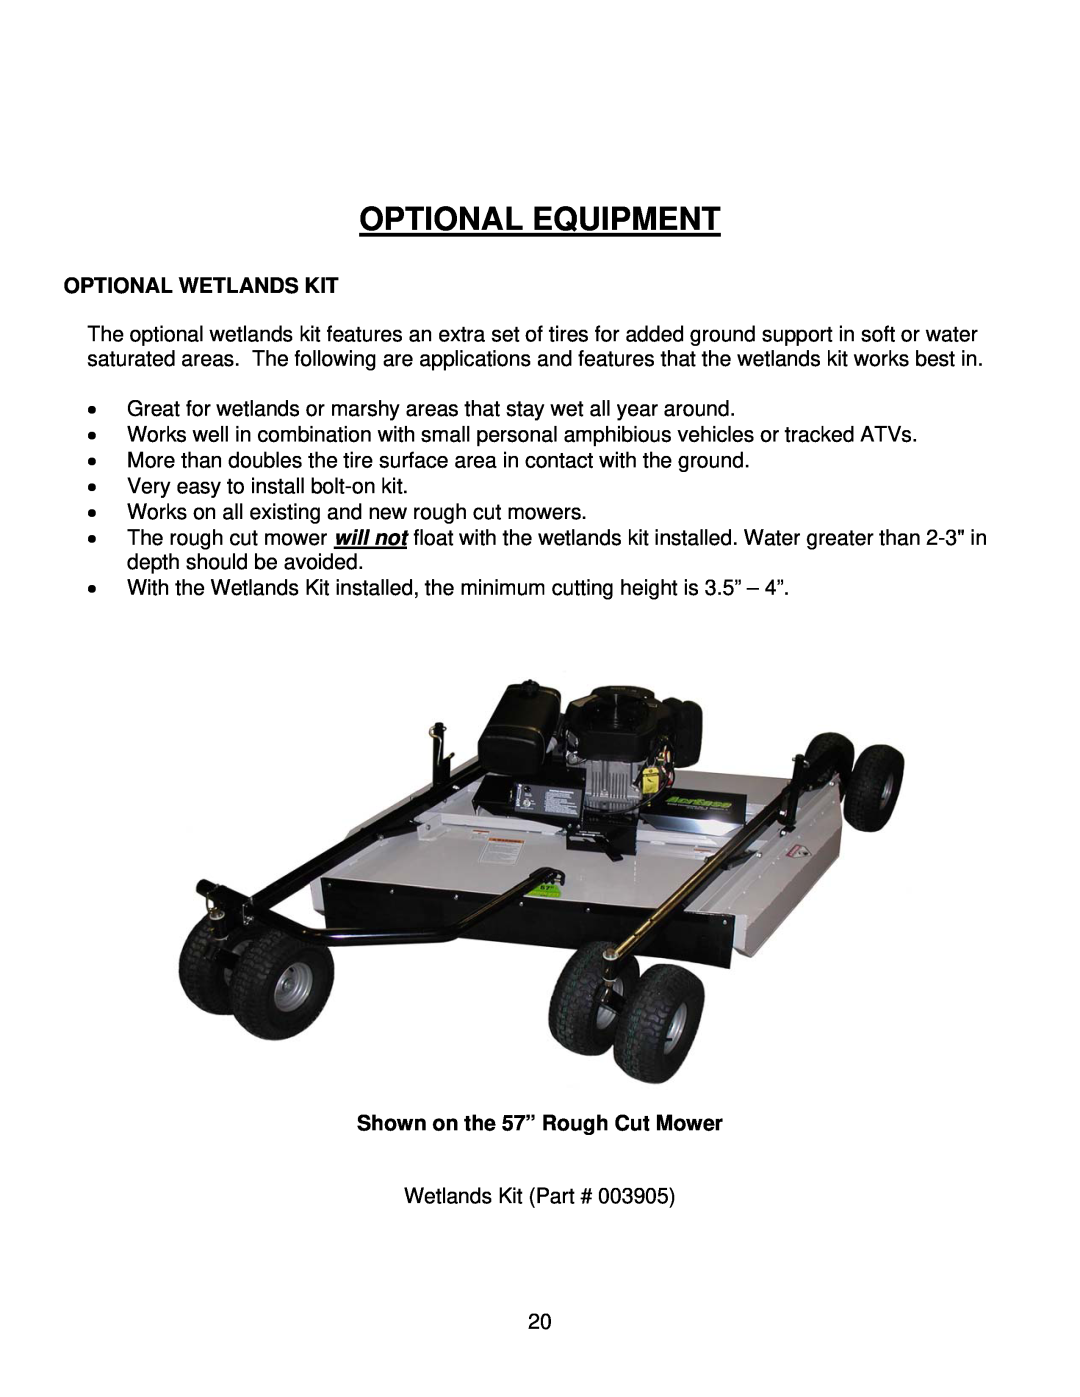 Kunz MR44K, MR44B owner manual Optional Equipment, Optional Wetlands Kit, Shown on the 57” Rough Cut Mower 